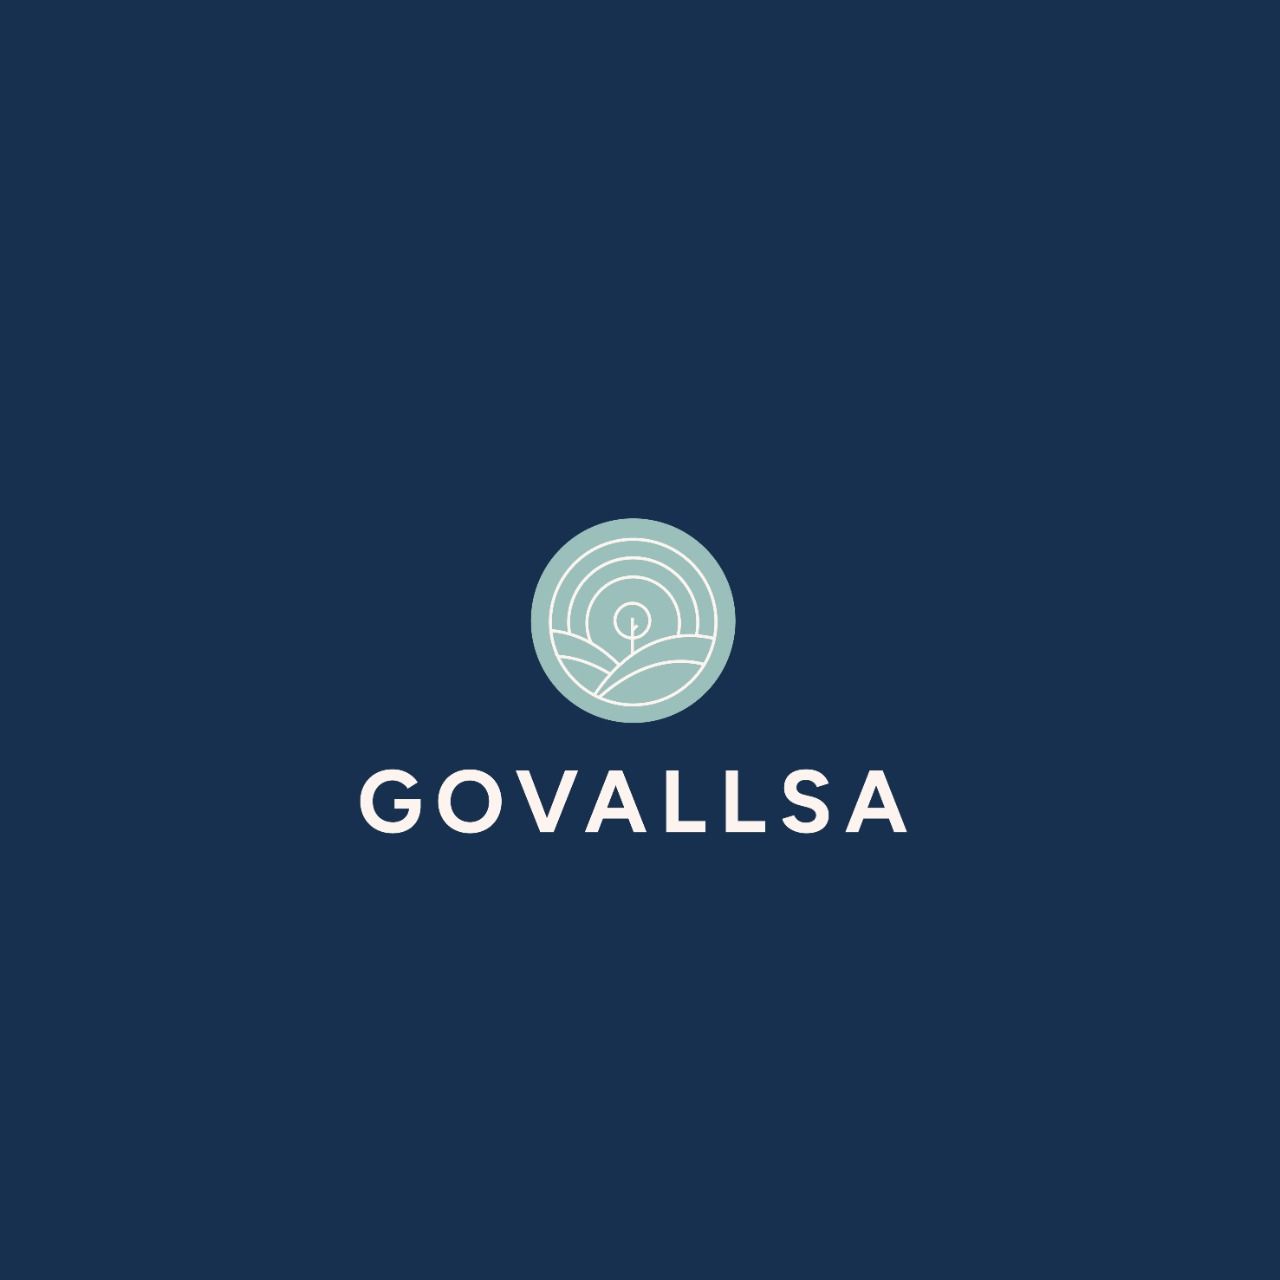 Govallsa